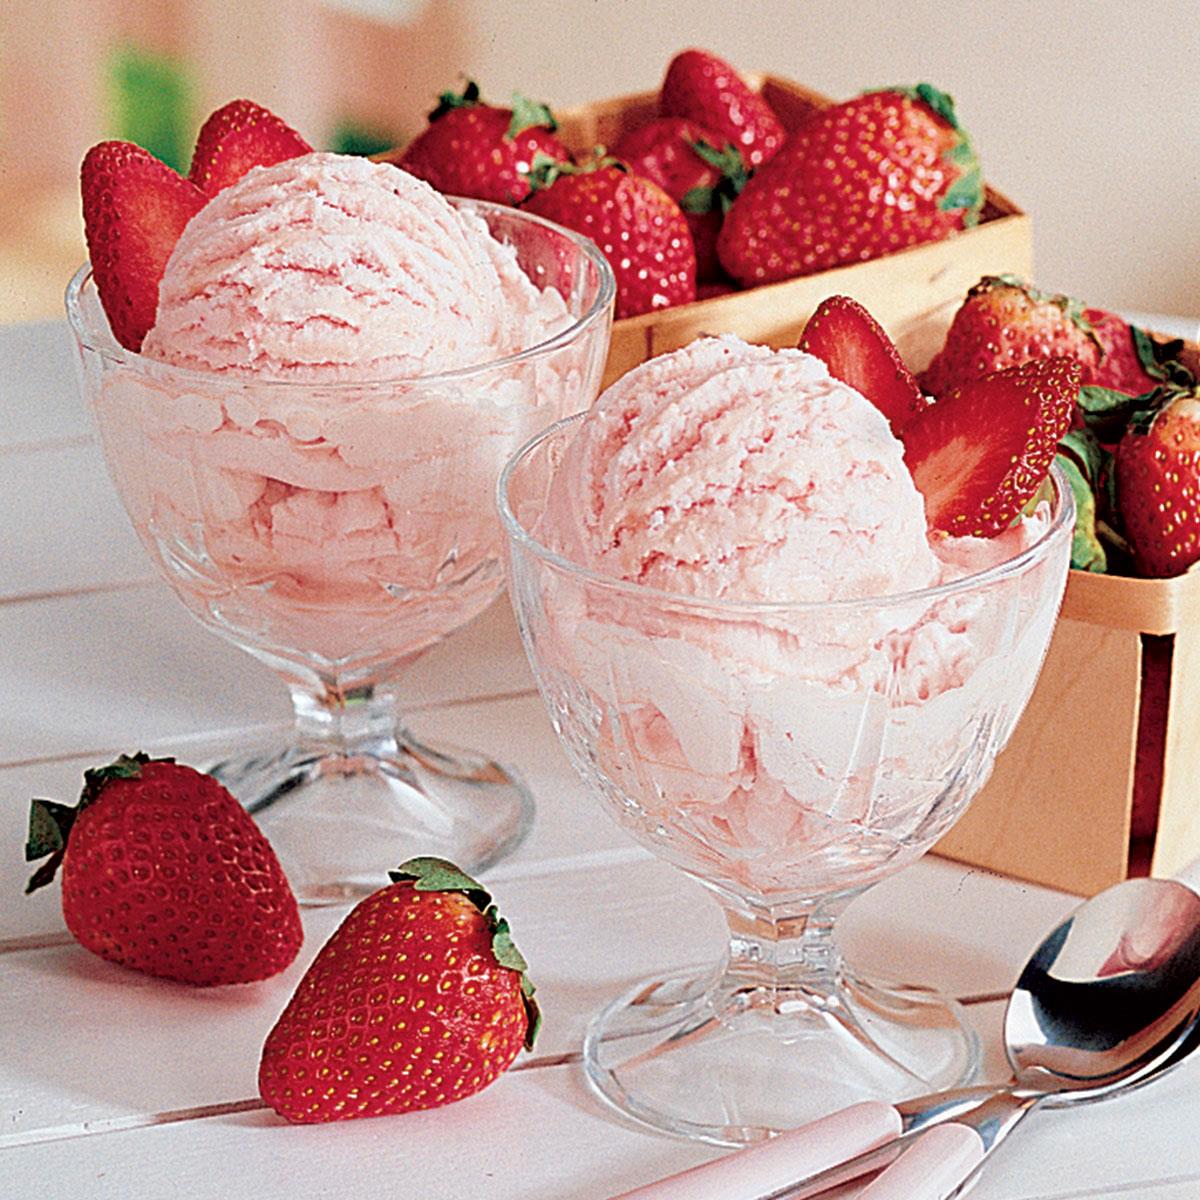 Best Strawberry Ice Cream Recipe: How to Make It | Taste of Home